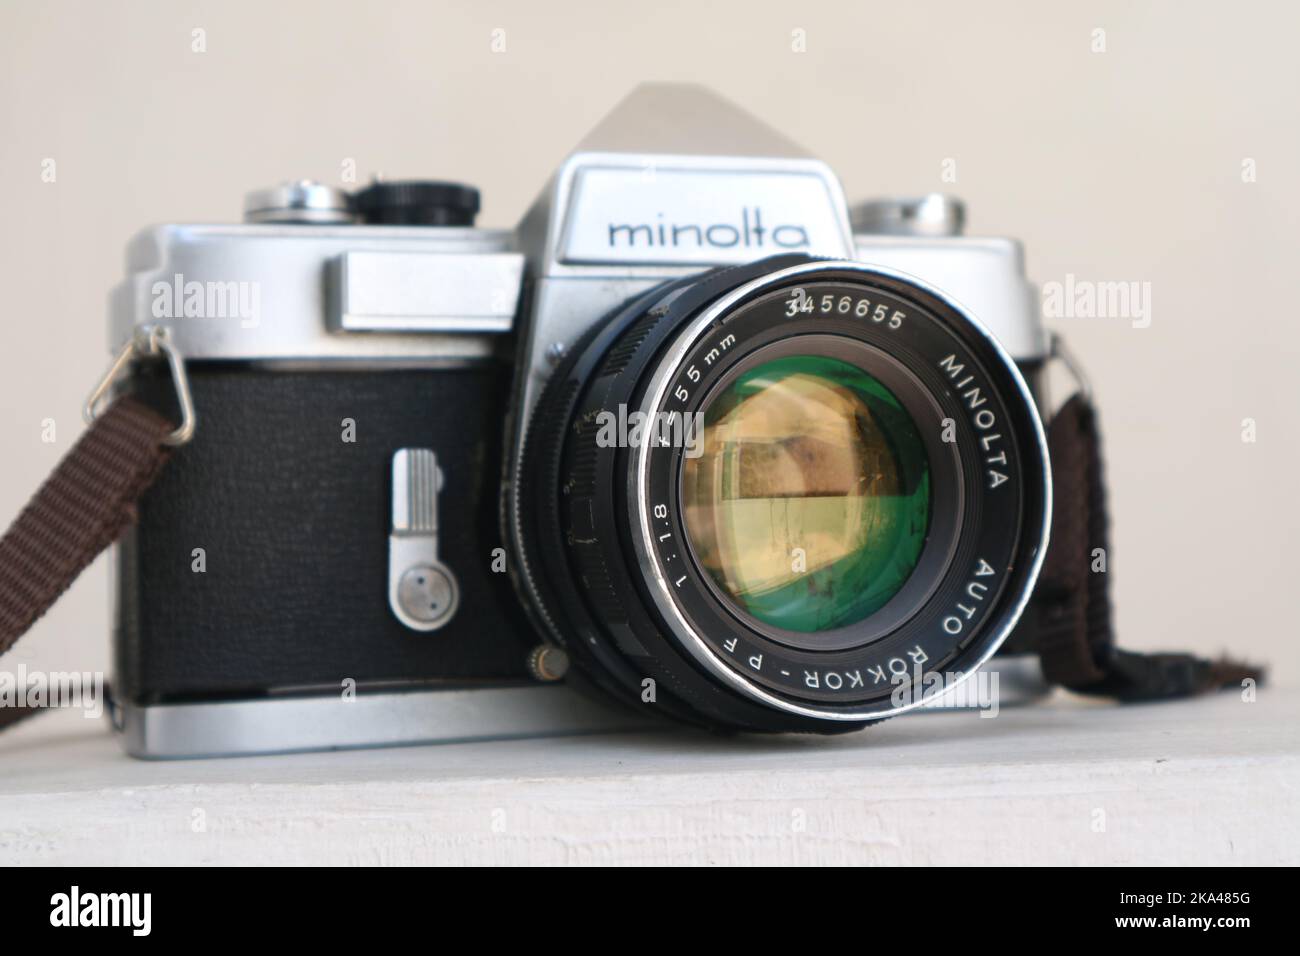 Minolta analog camera hi-res stock photography and images - Alamy